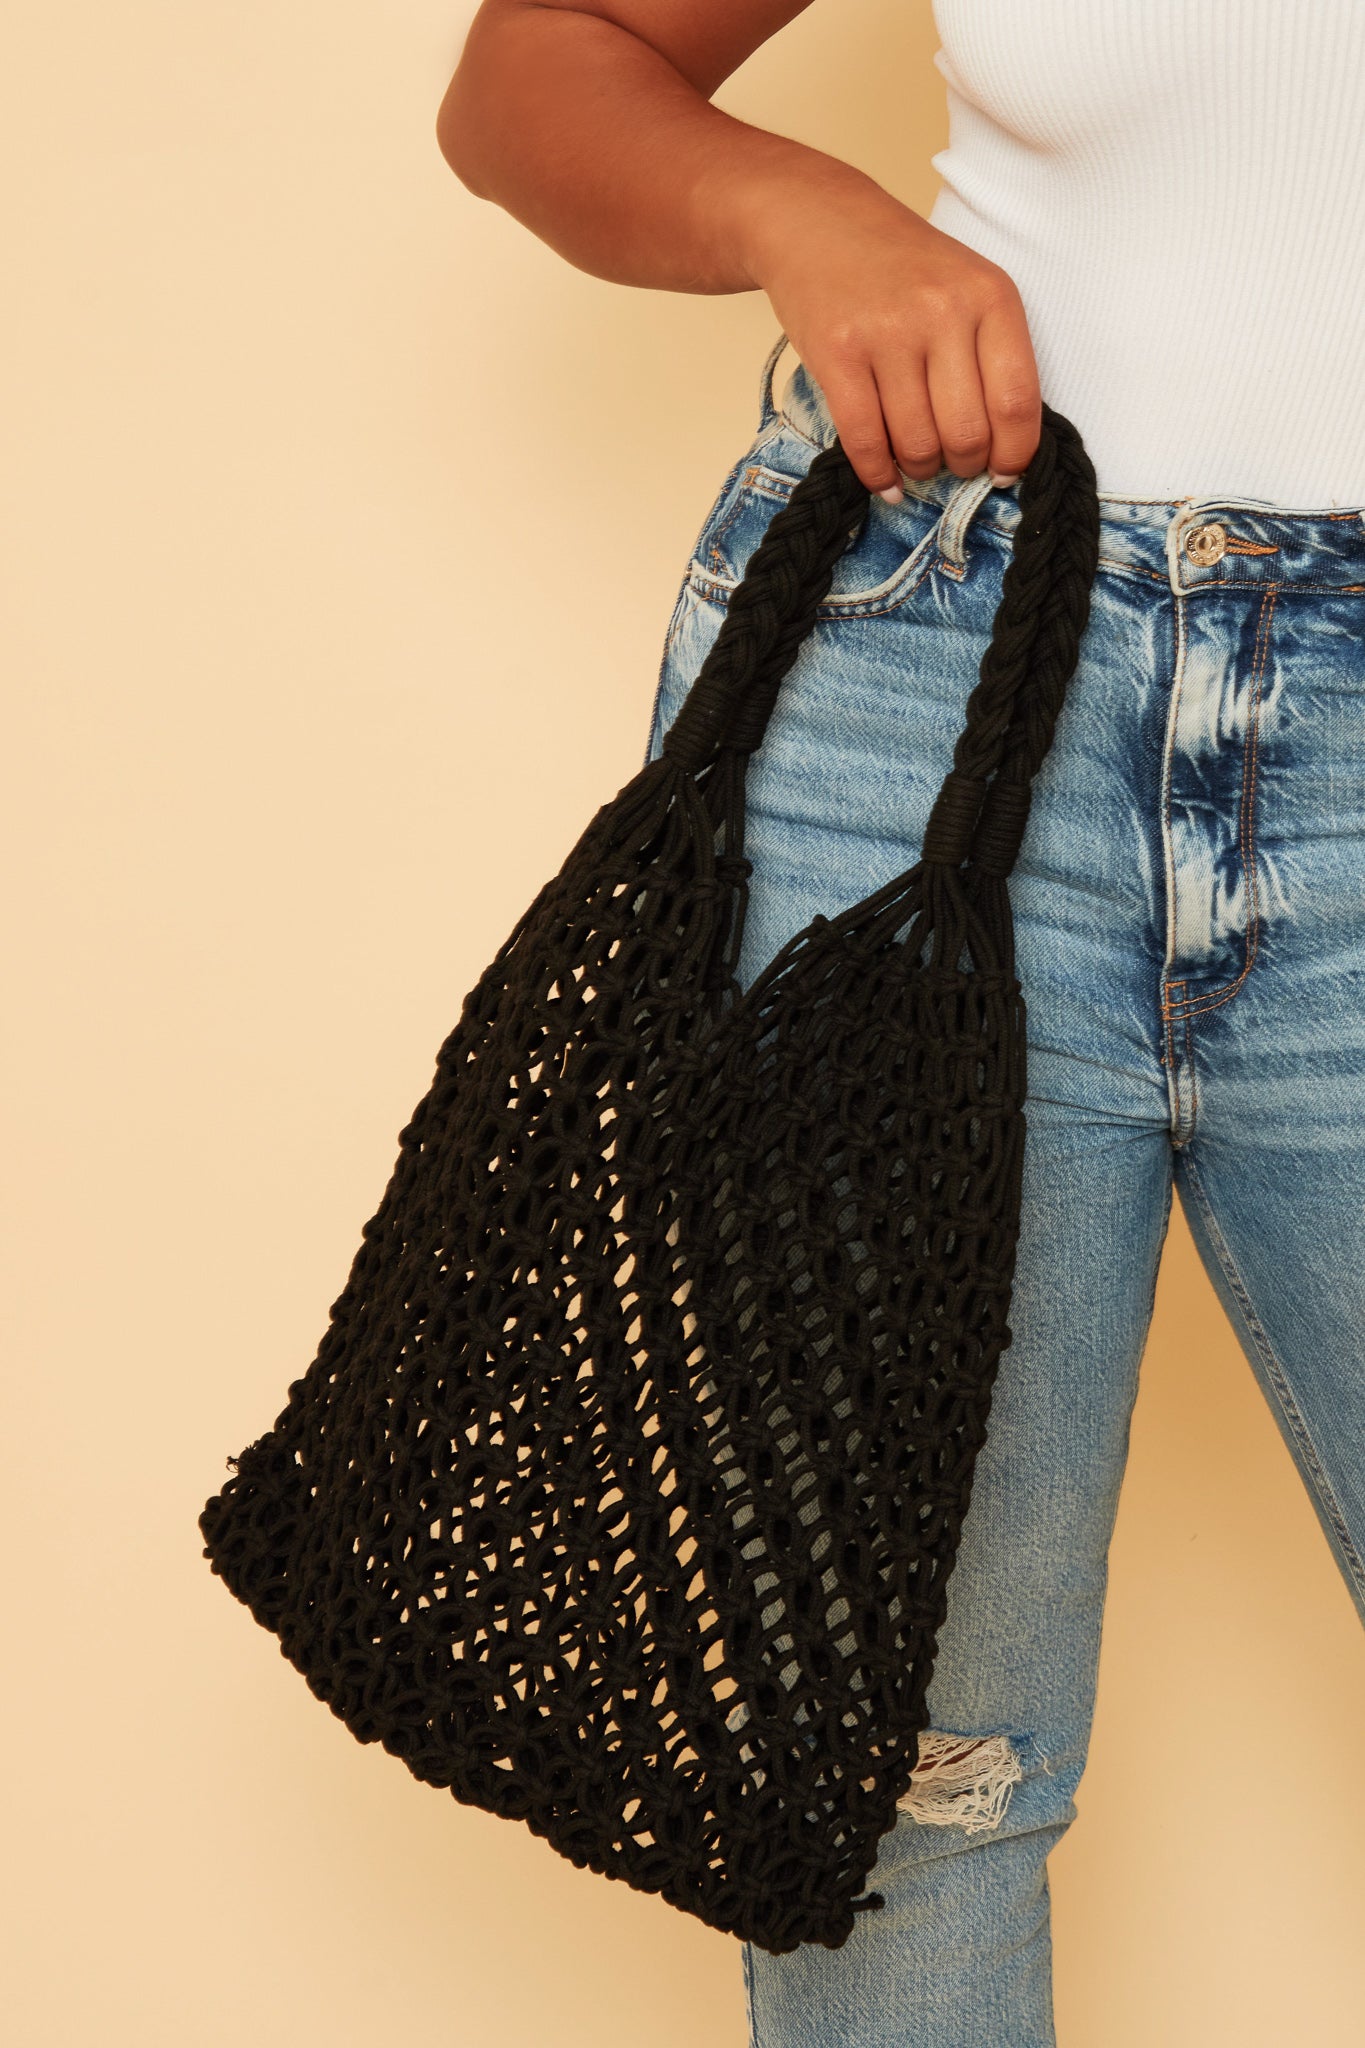 Black String Shopper Bag